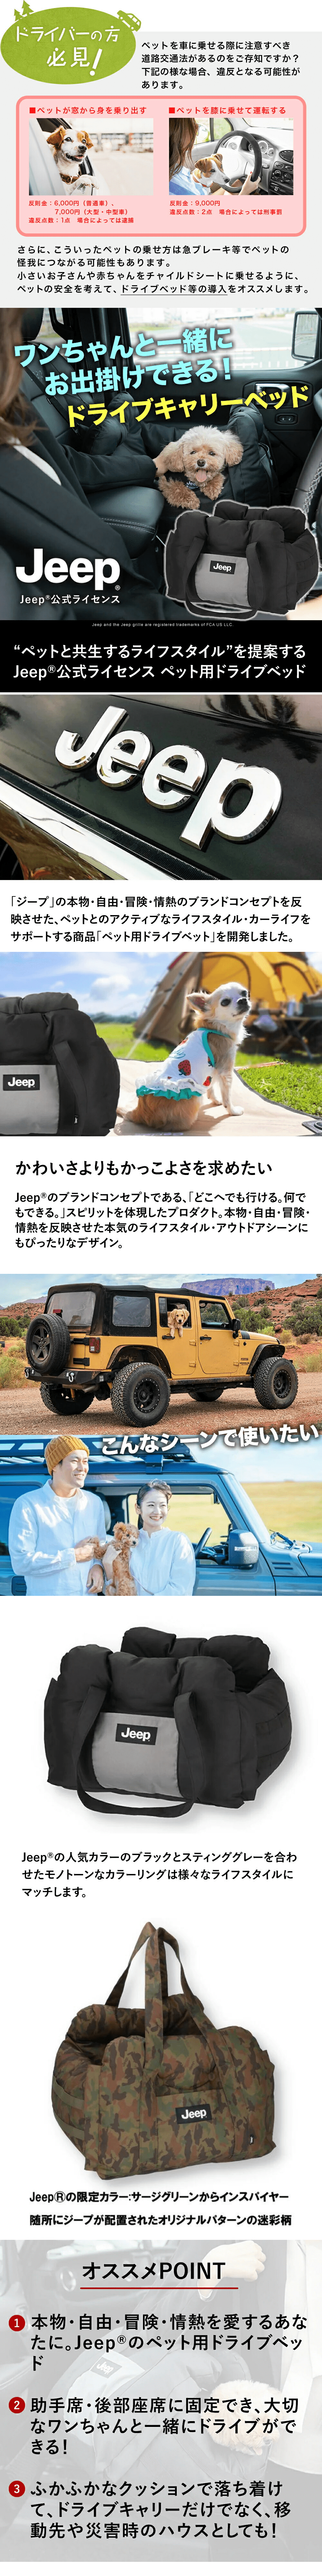 Jeep ドライブベッド